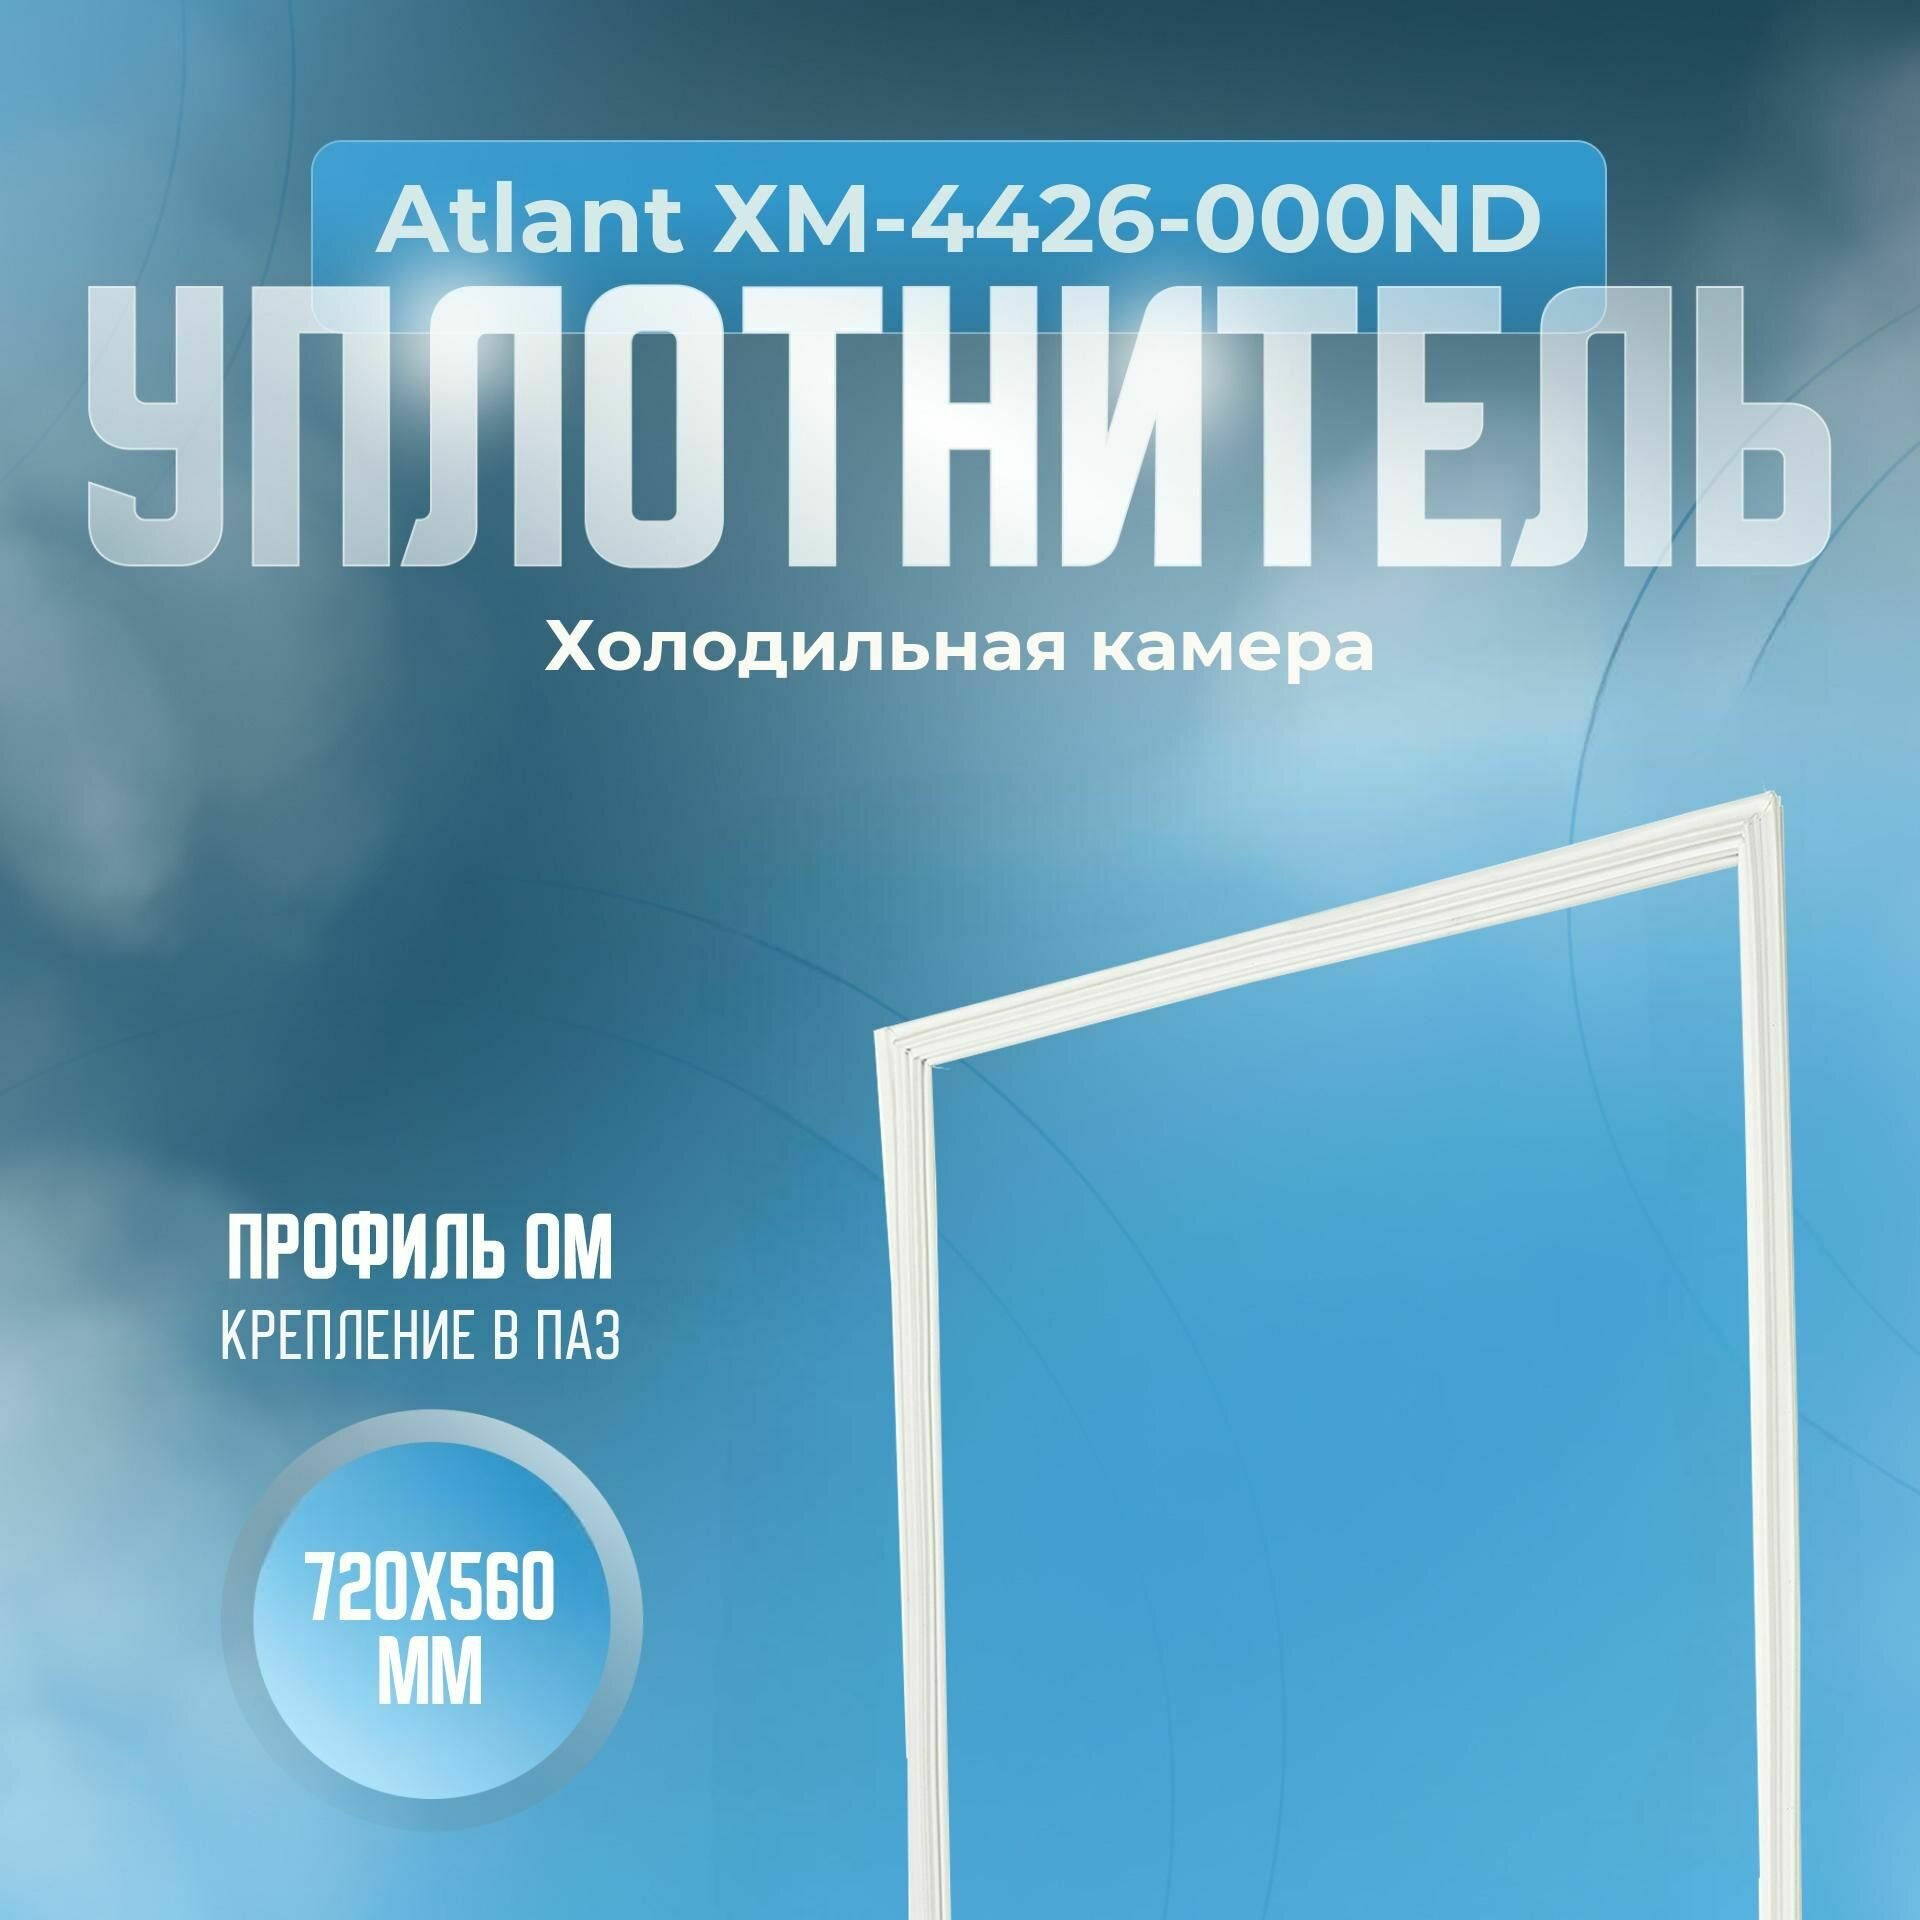 Уплотнитель Atlant ХМ-4426-000ND. х. к, Размер - 720х560 мм. ОМ